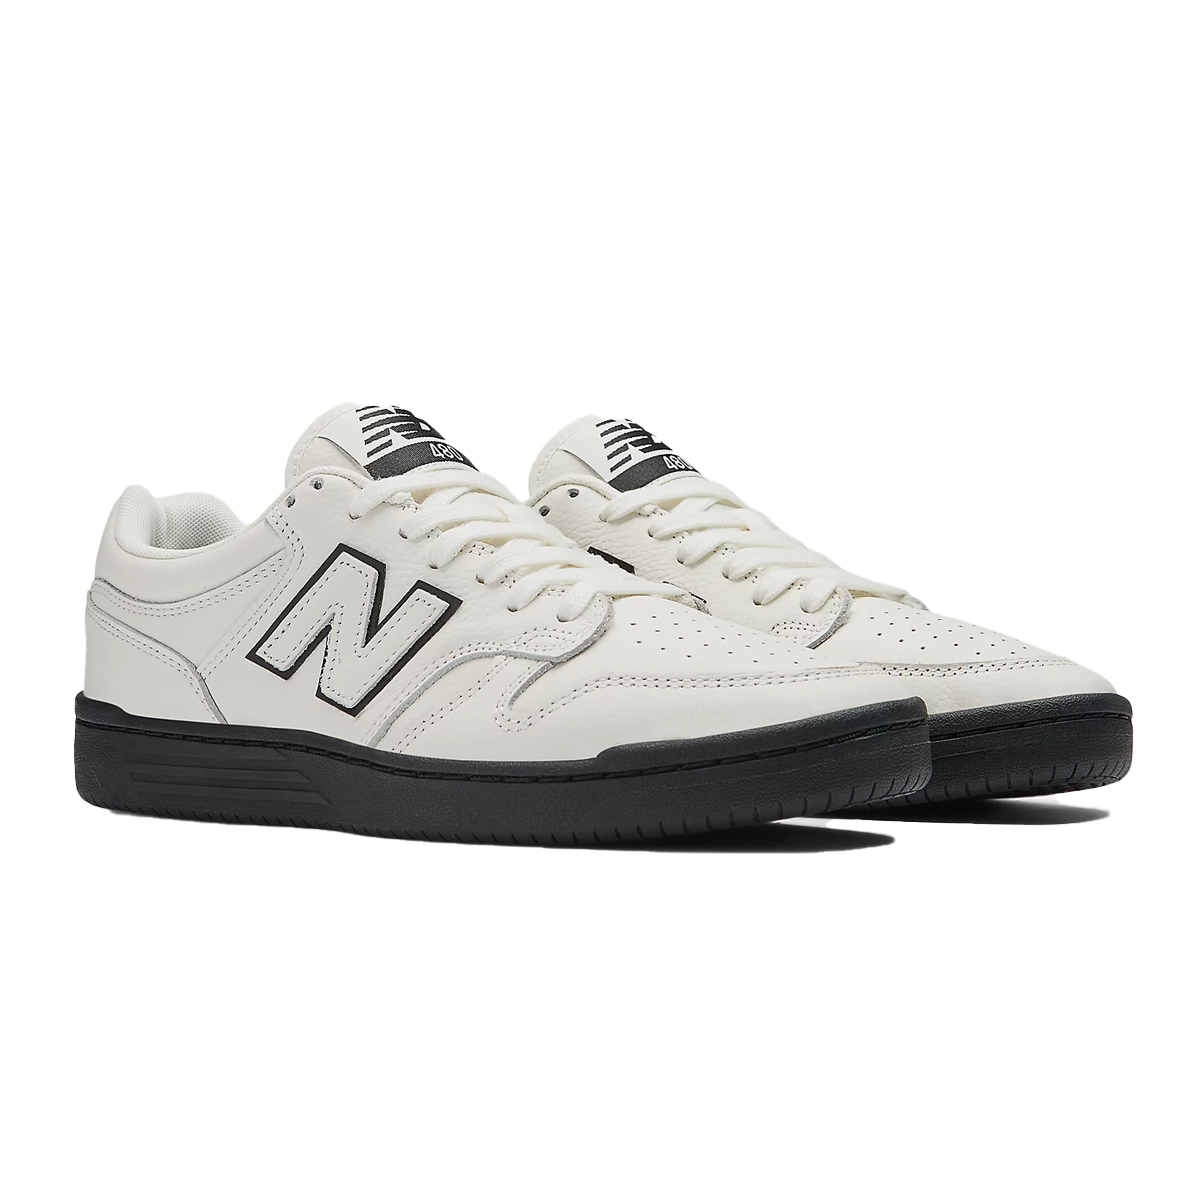 New Balance NM 480 Shoes - White/Black